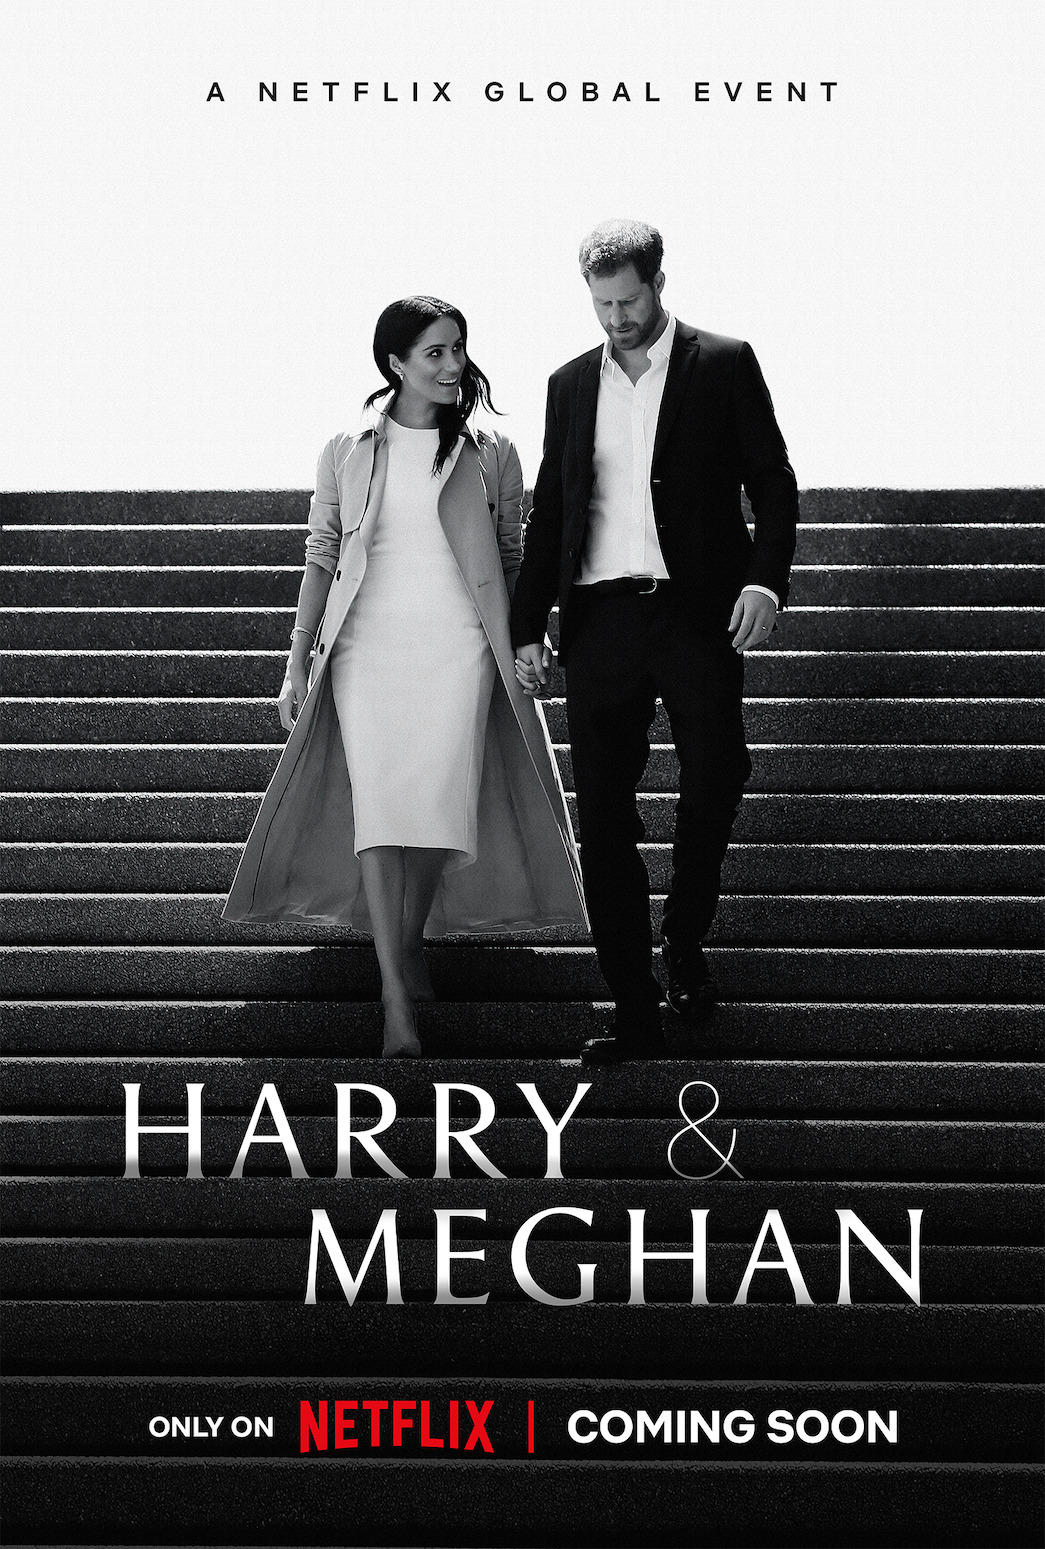 Harry & Meghan Documentary Trailer, Release Date and Photos - Netflix Tudum